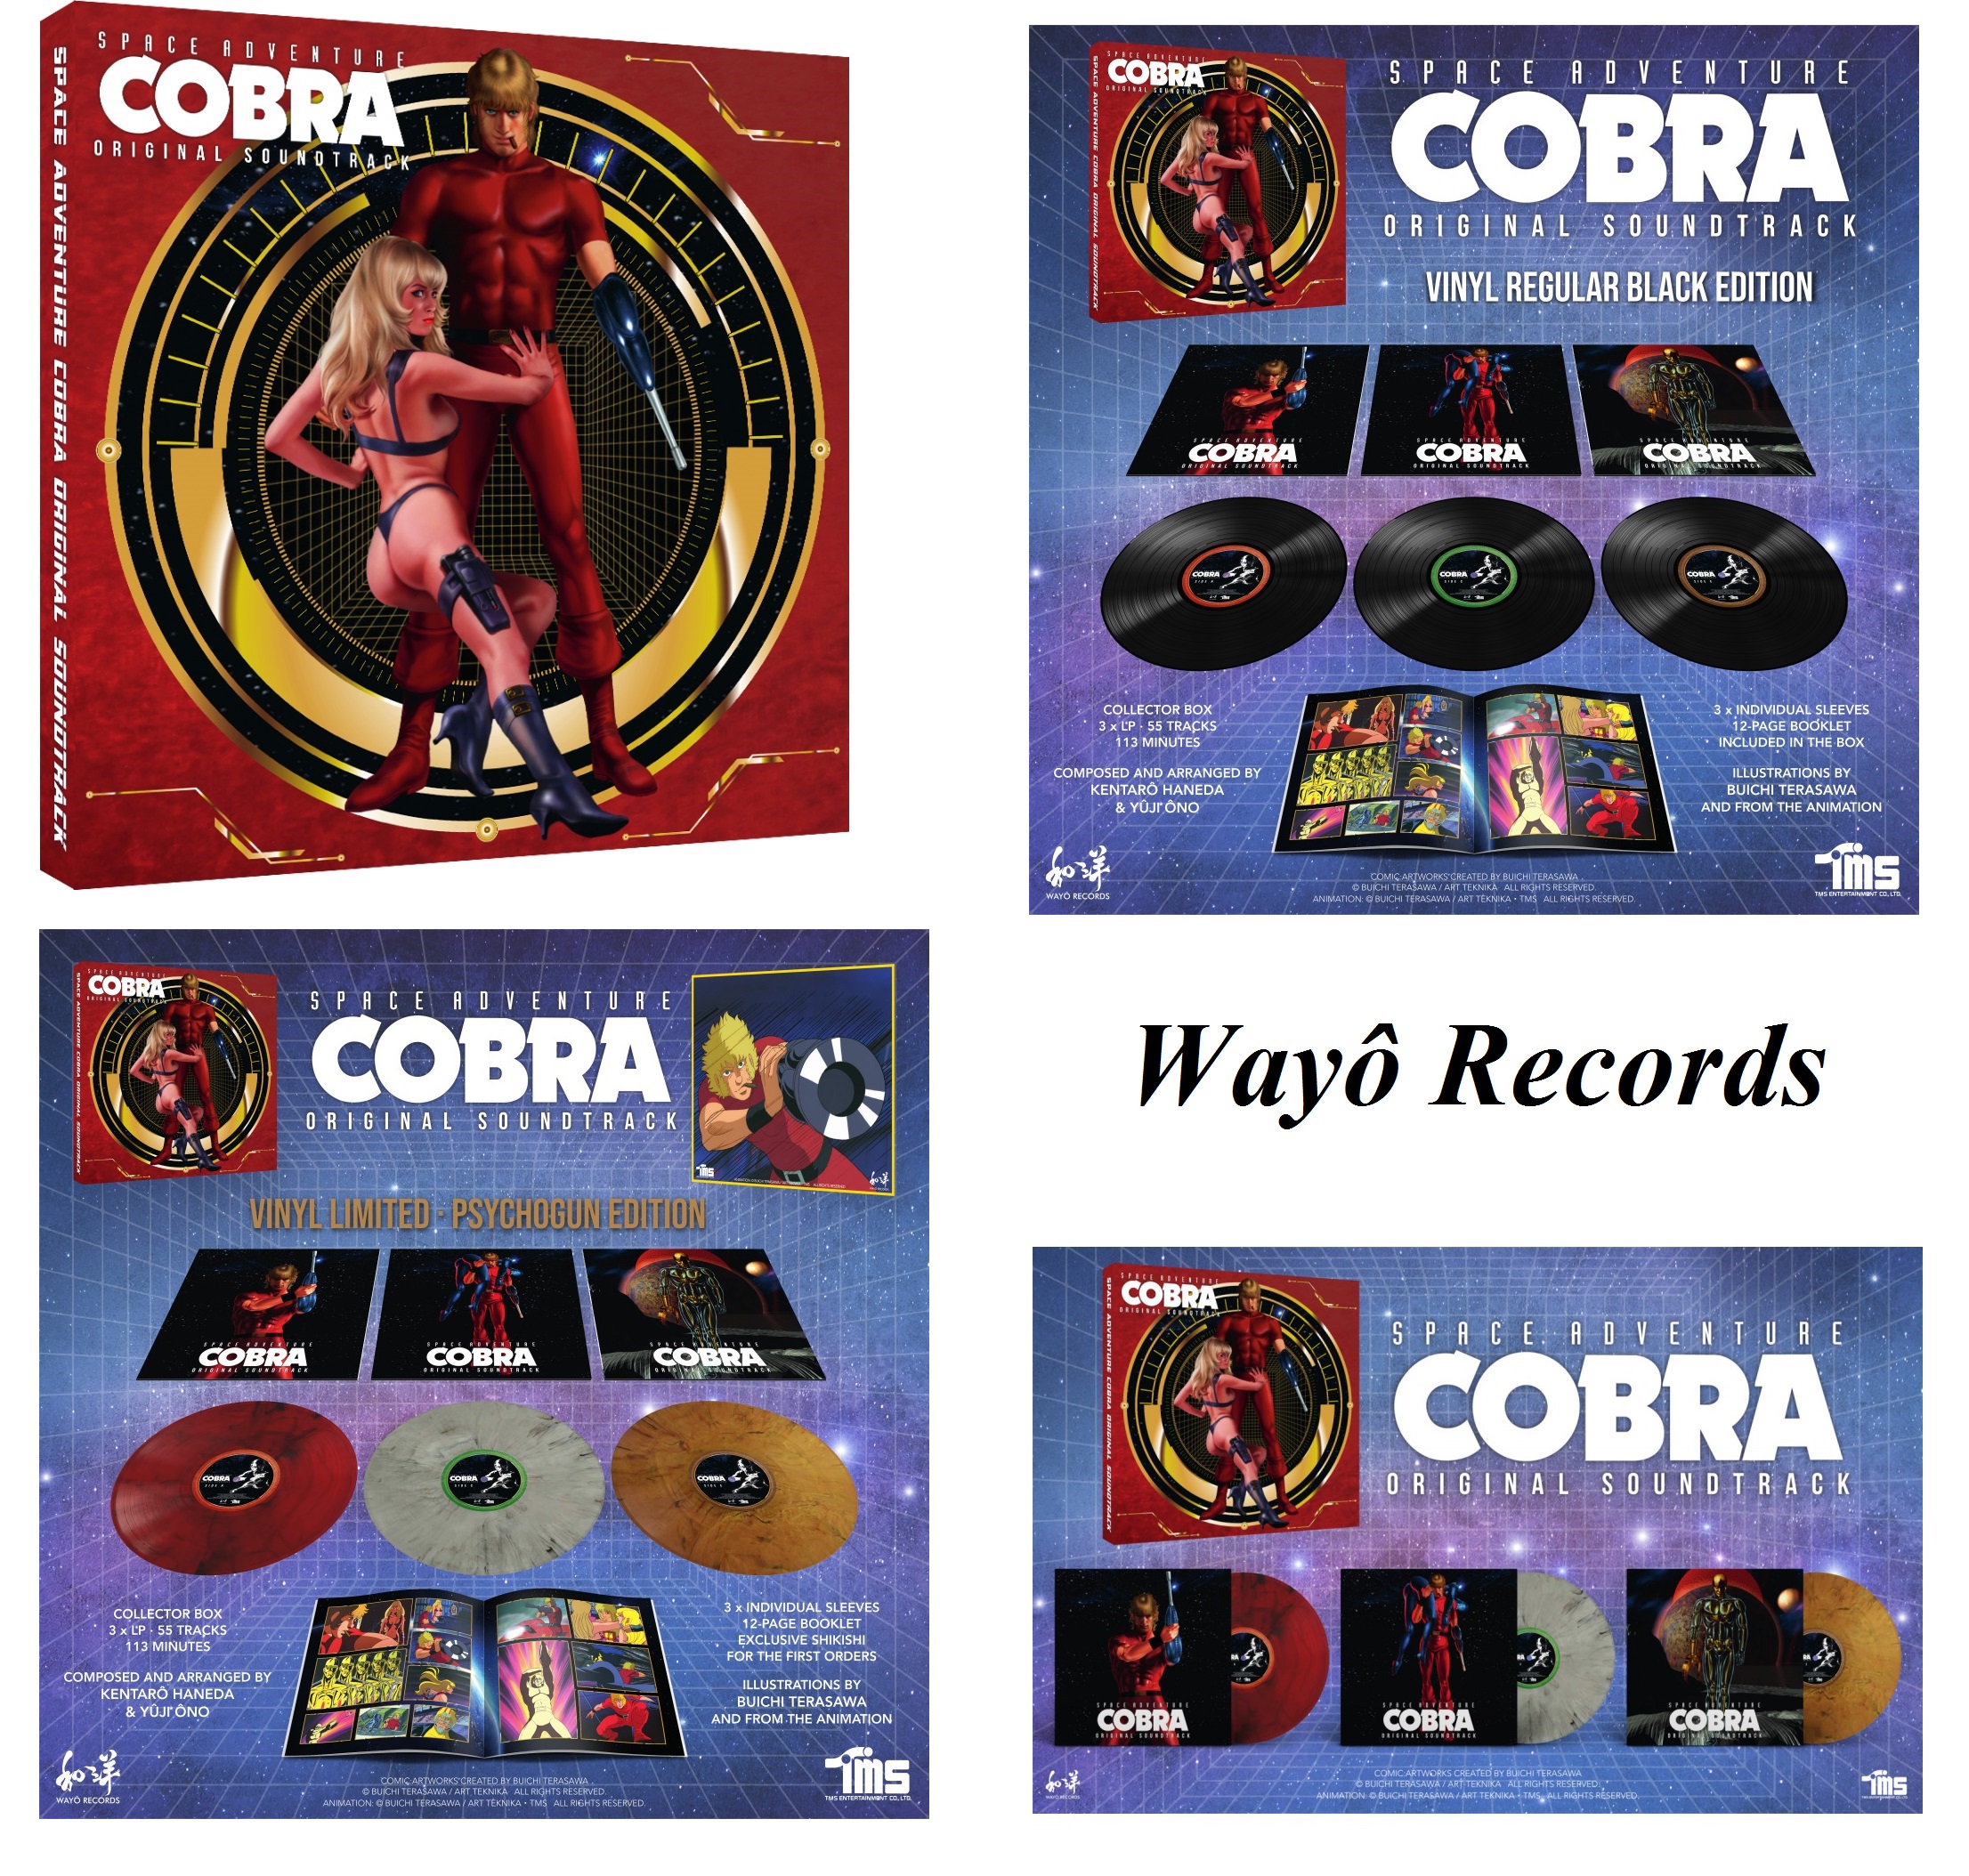 Space Adventure Cobra (Vinyle)